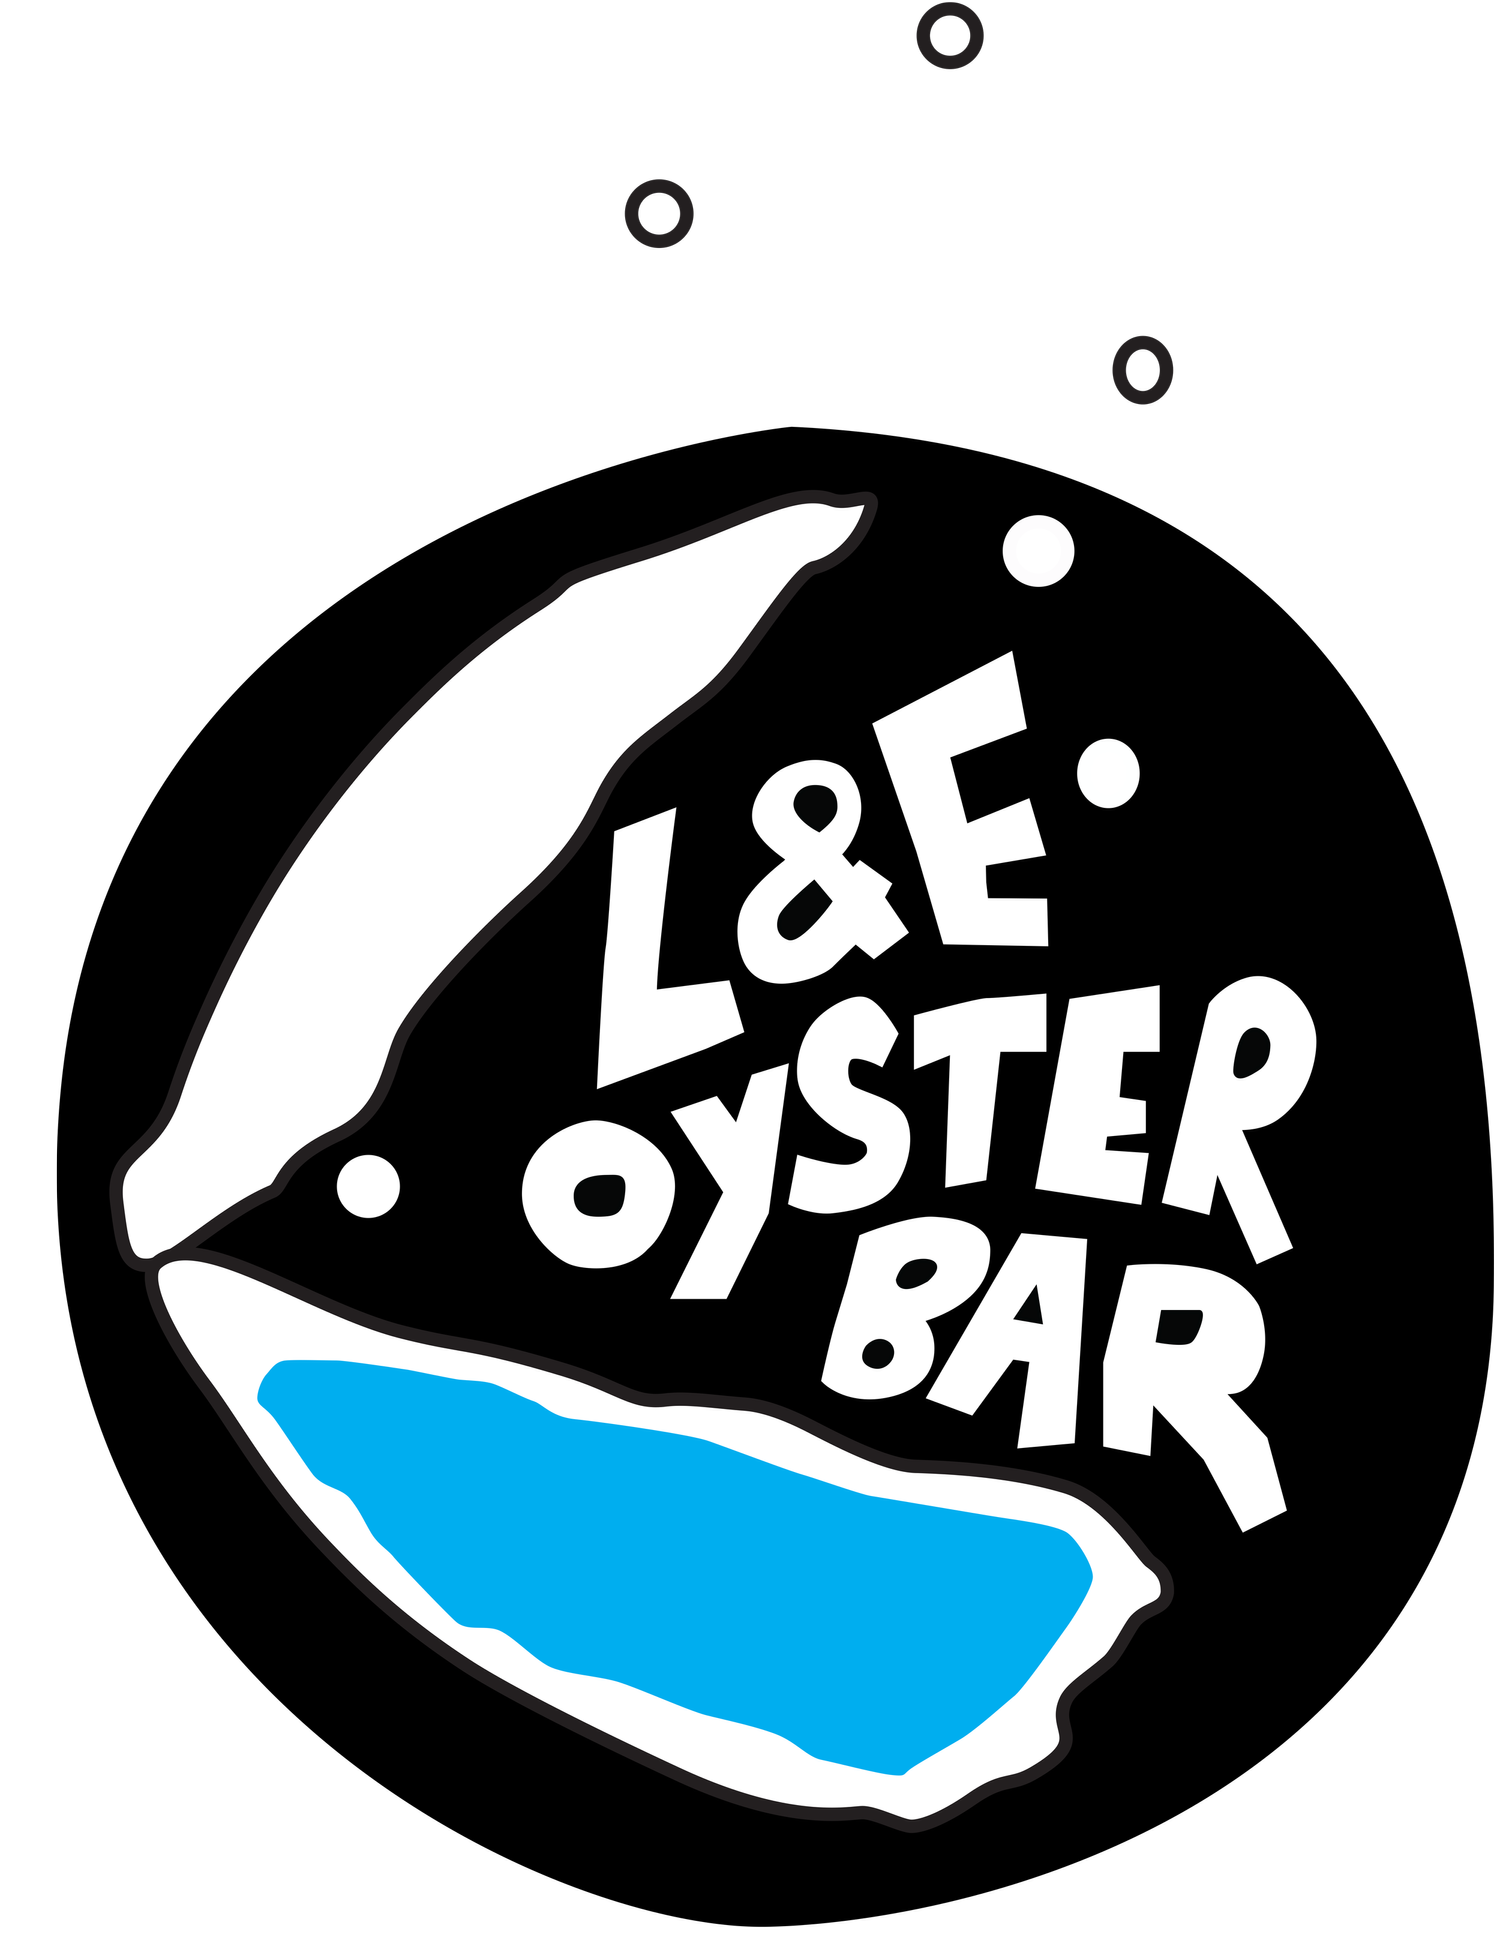 L &amp; E Oyster Bar